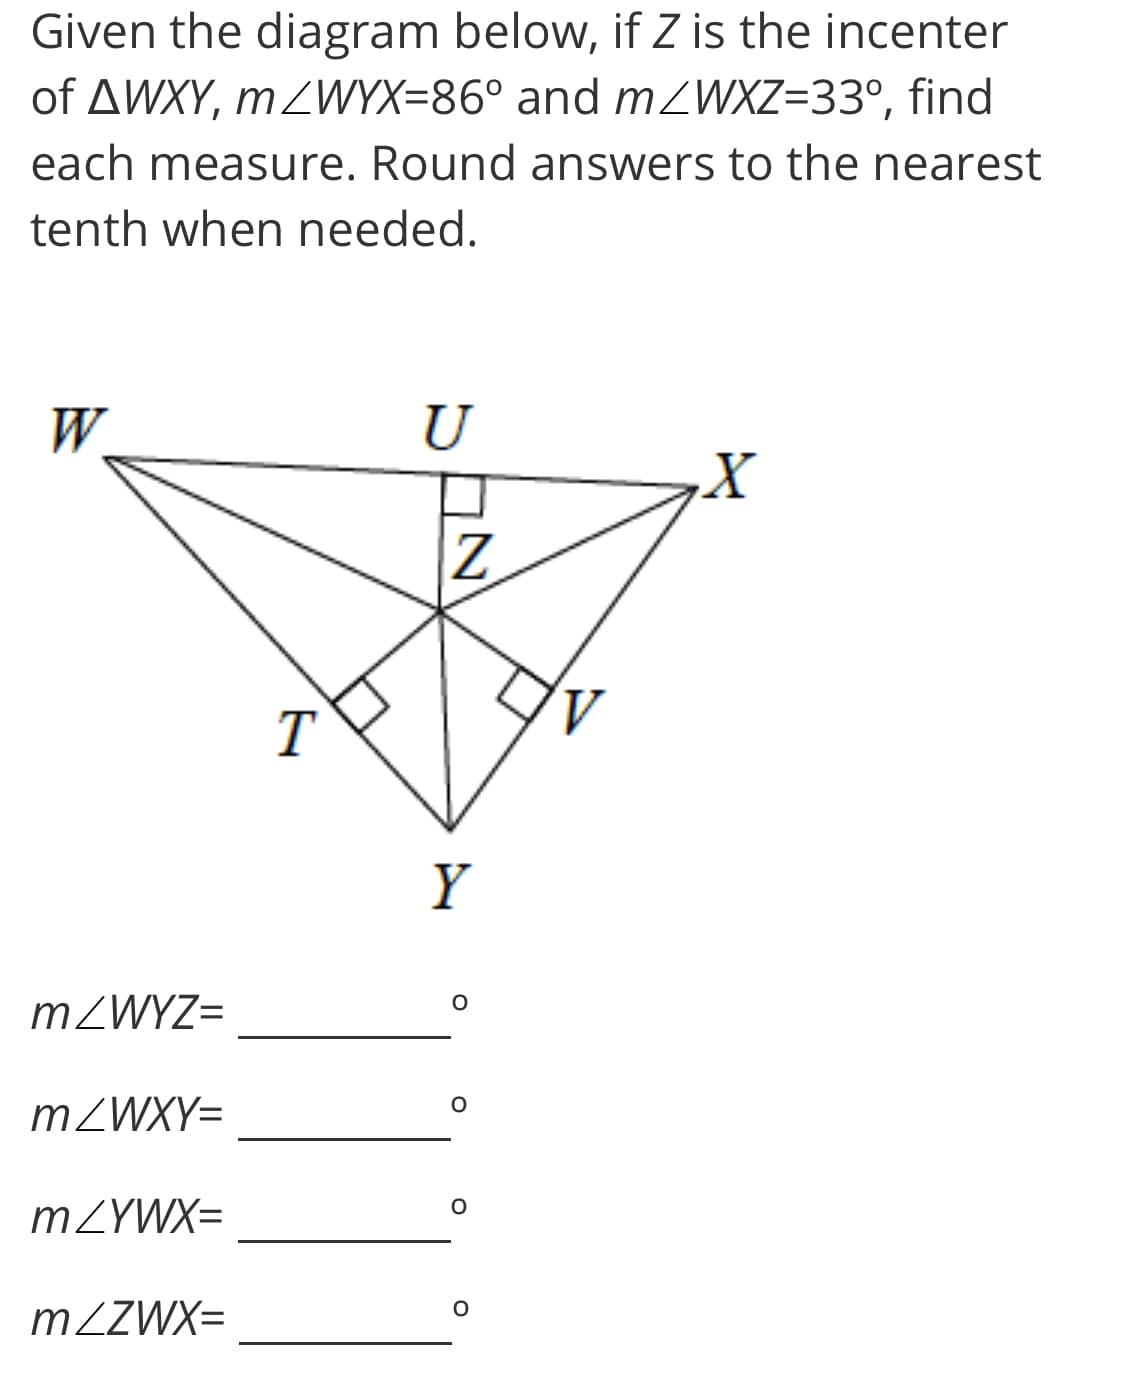 Given the diagram below, if Z is the incenter
of AWXY, mZWYX=86° and MZWXZ=33°, find
each measure. Round answers to the nearest
tenth when needed.
W.
U
A.
T
Y
MZWYZ=
MZWXY=
MZYWX=
MZZWX=
